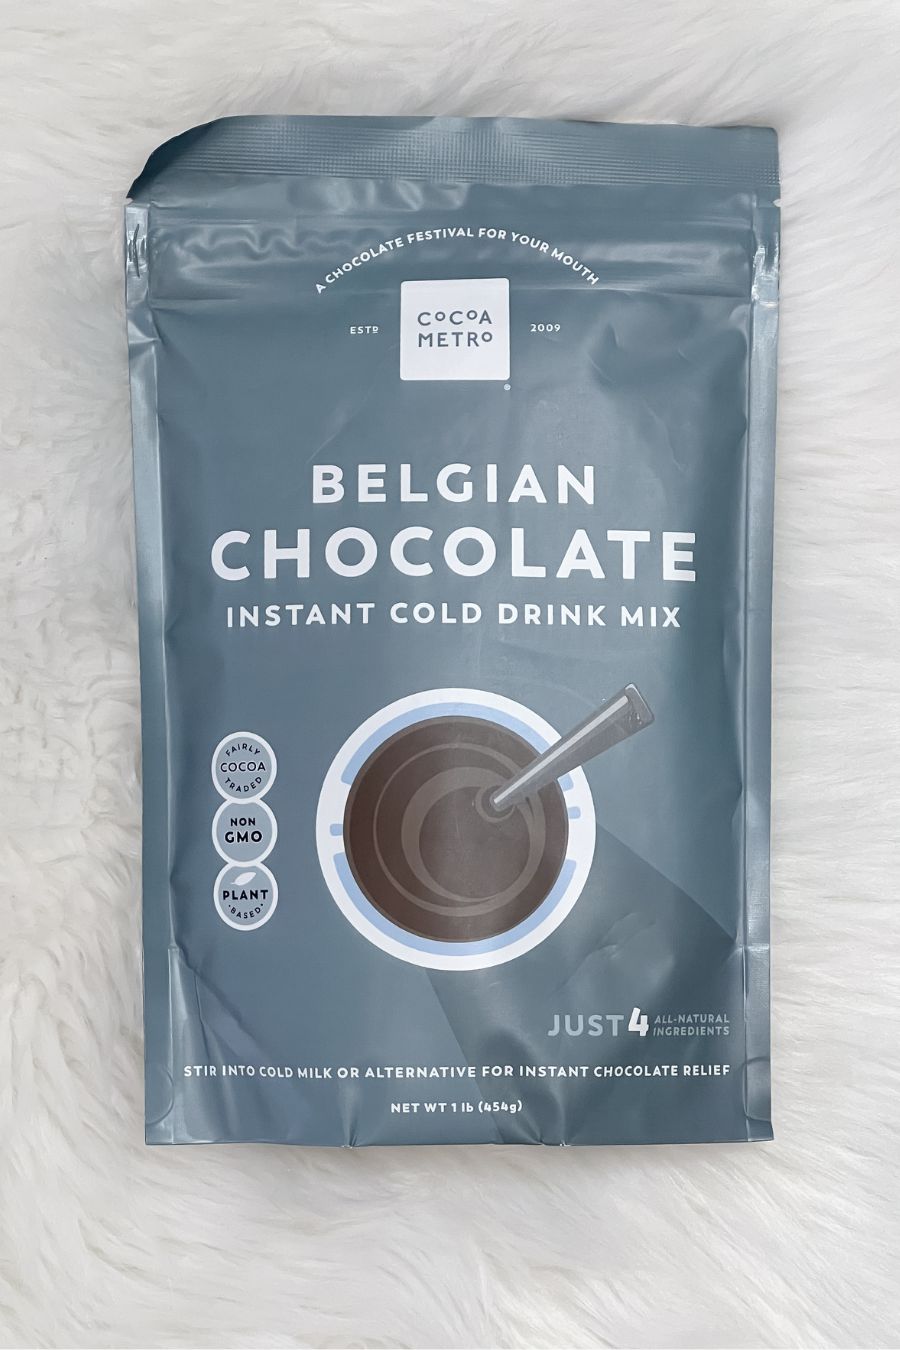 Cocoa Metro Belgian Chocolate Drink Mix